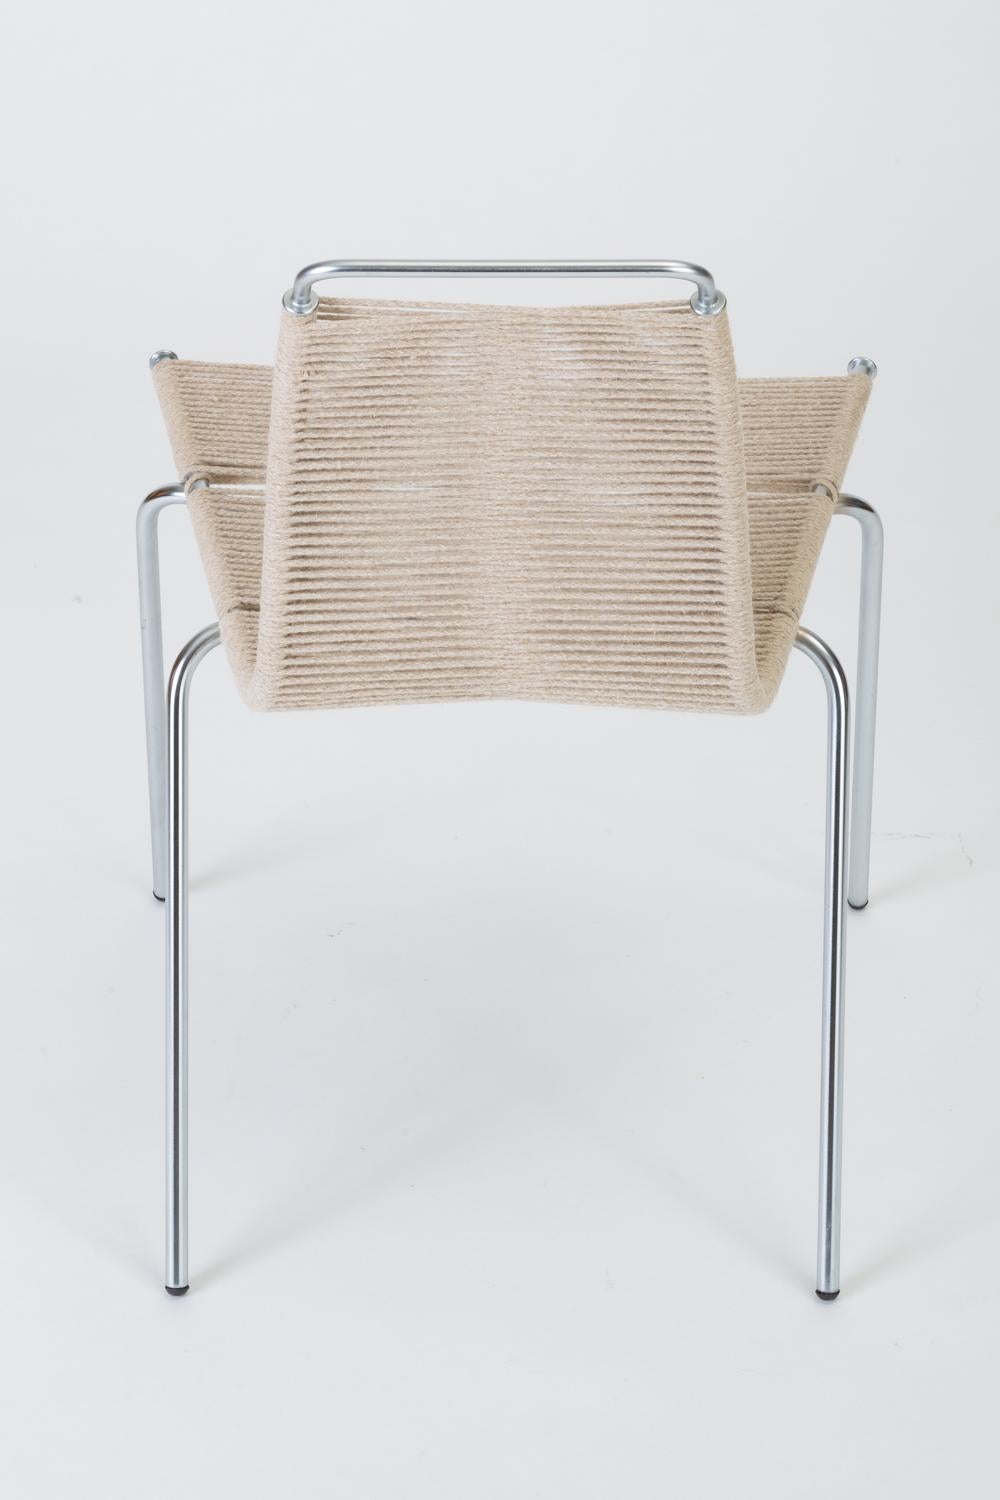 Single PK-1 Dining or Accent Chair by Poul Kjærholm for E Kold Christensen 1